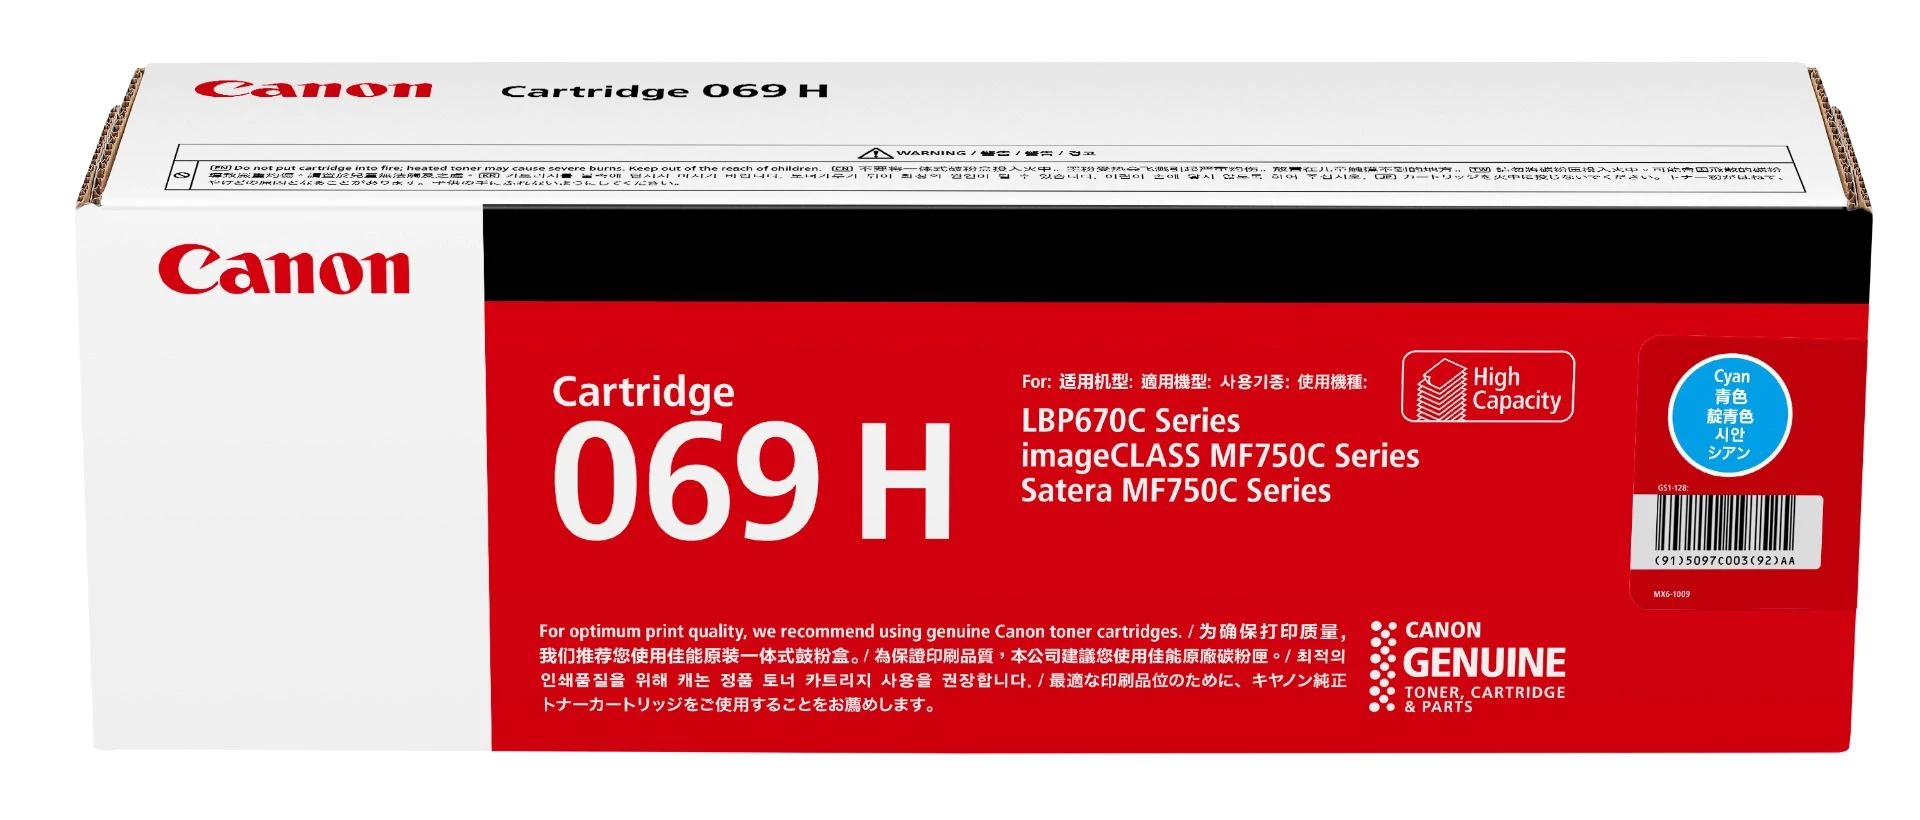 Canon Cartridge 069H CY Cyan Toner Cartridge (High Capacity)